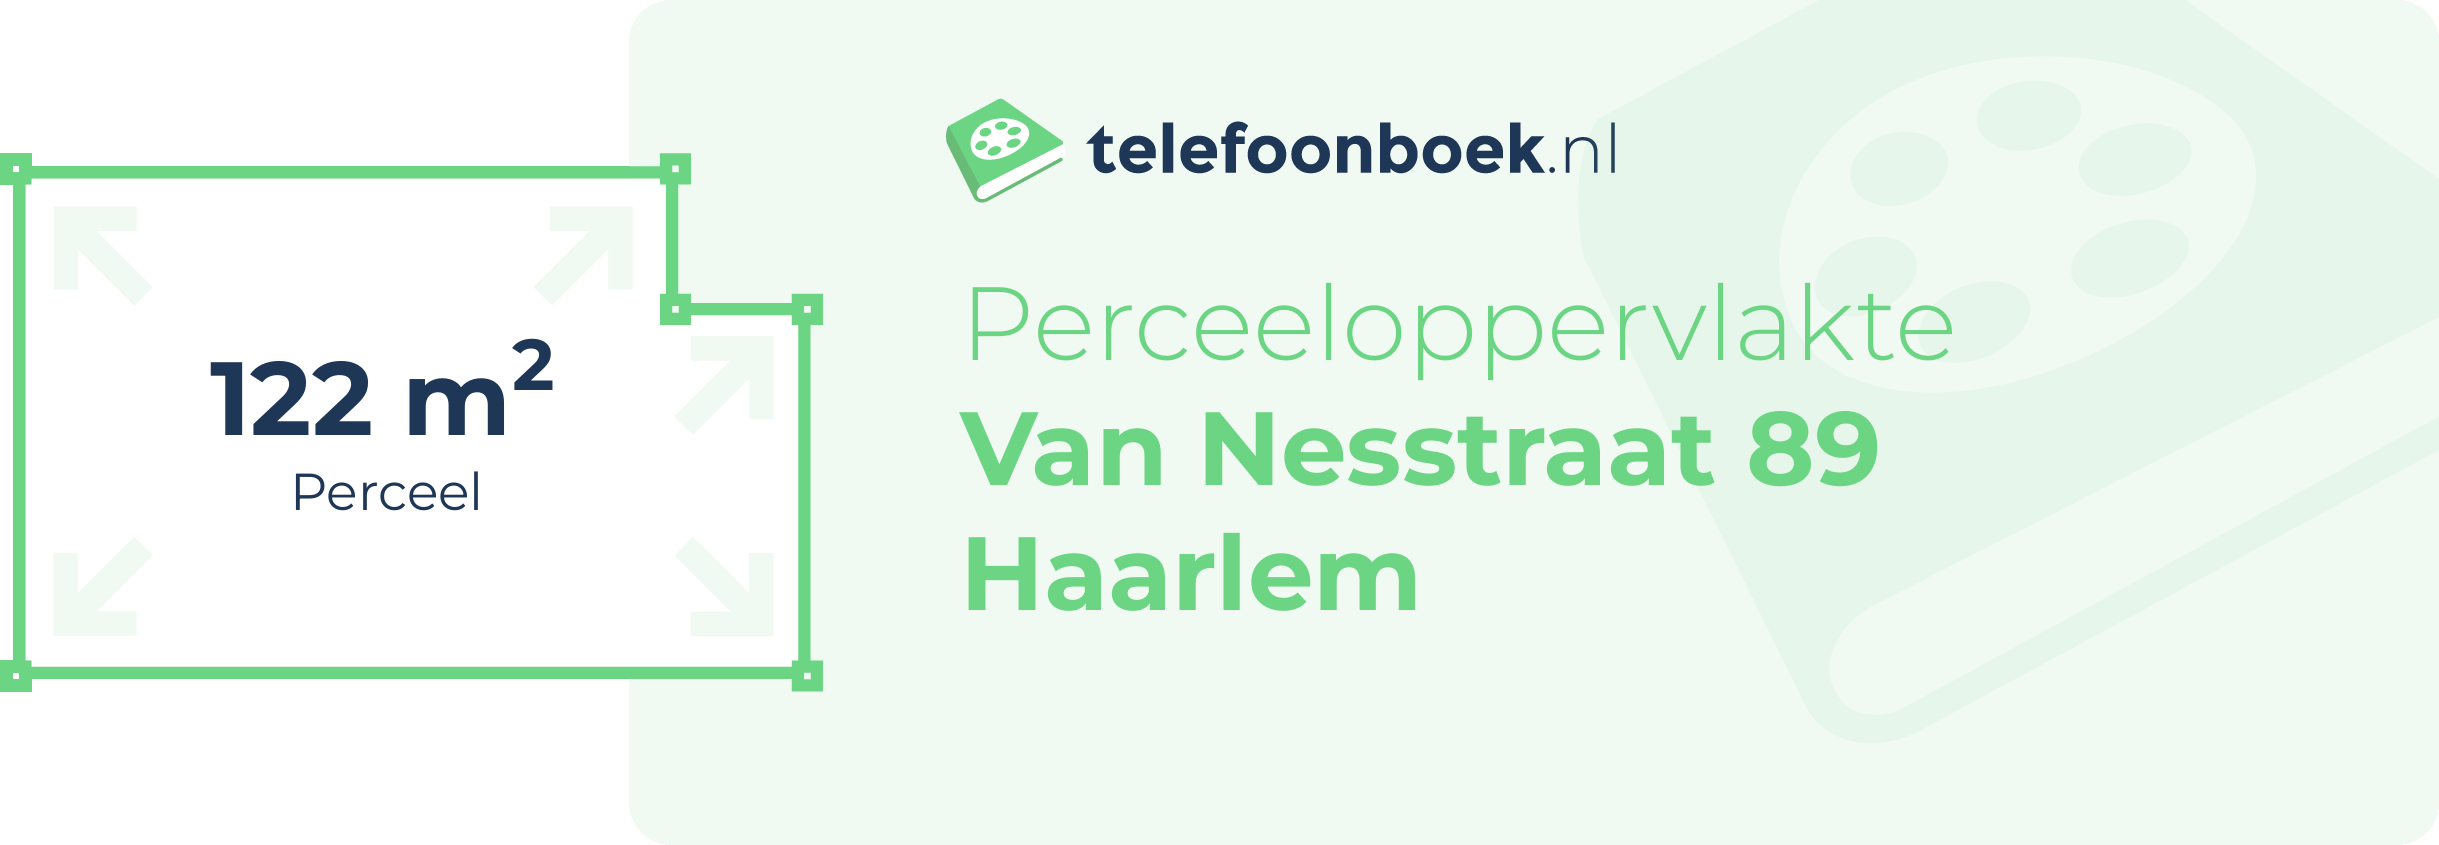 Perceeloppervlakte Van Nesstraat 89 Haarlem